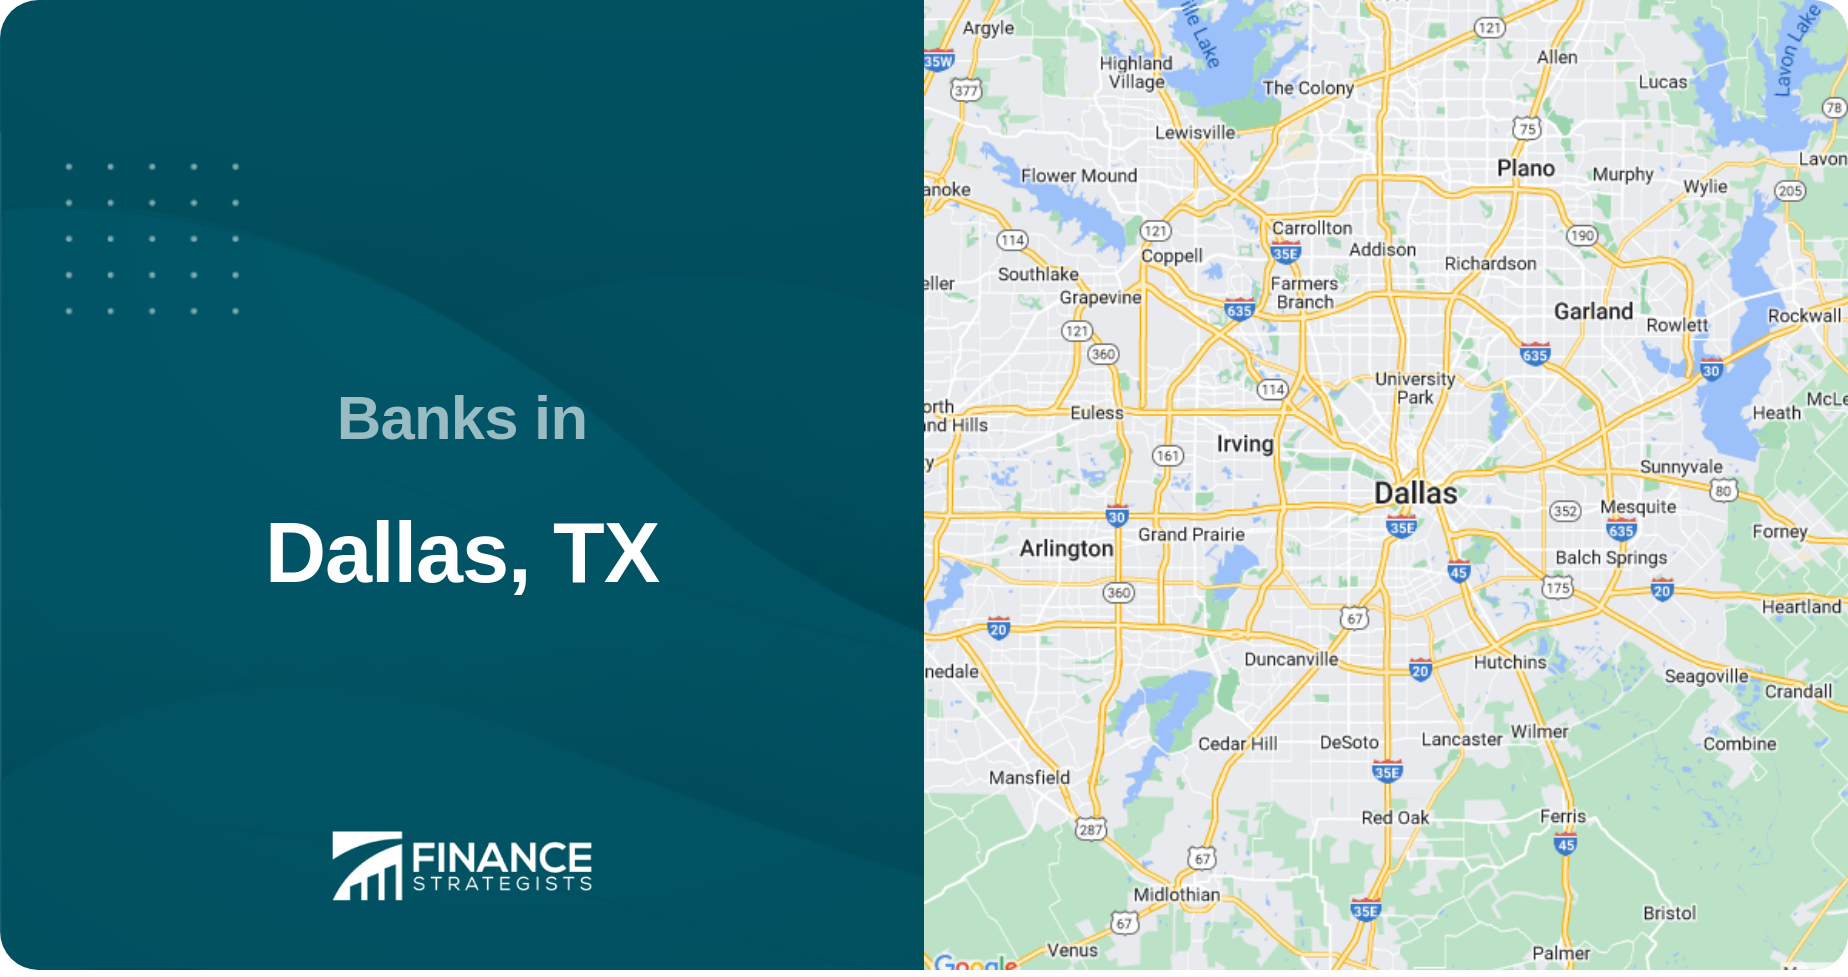 Banks in Dallas, TX